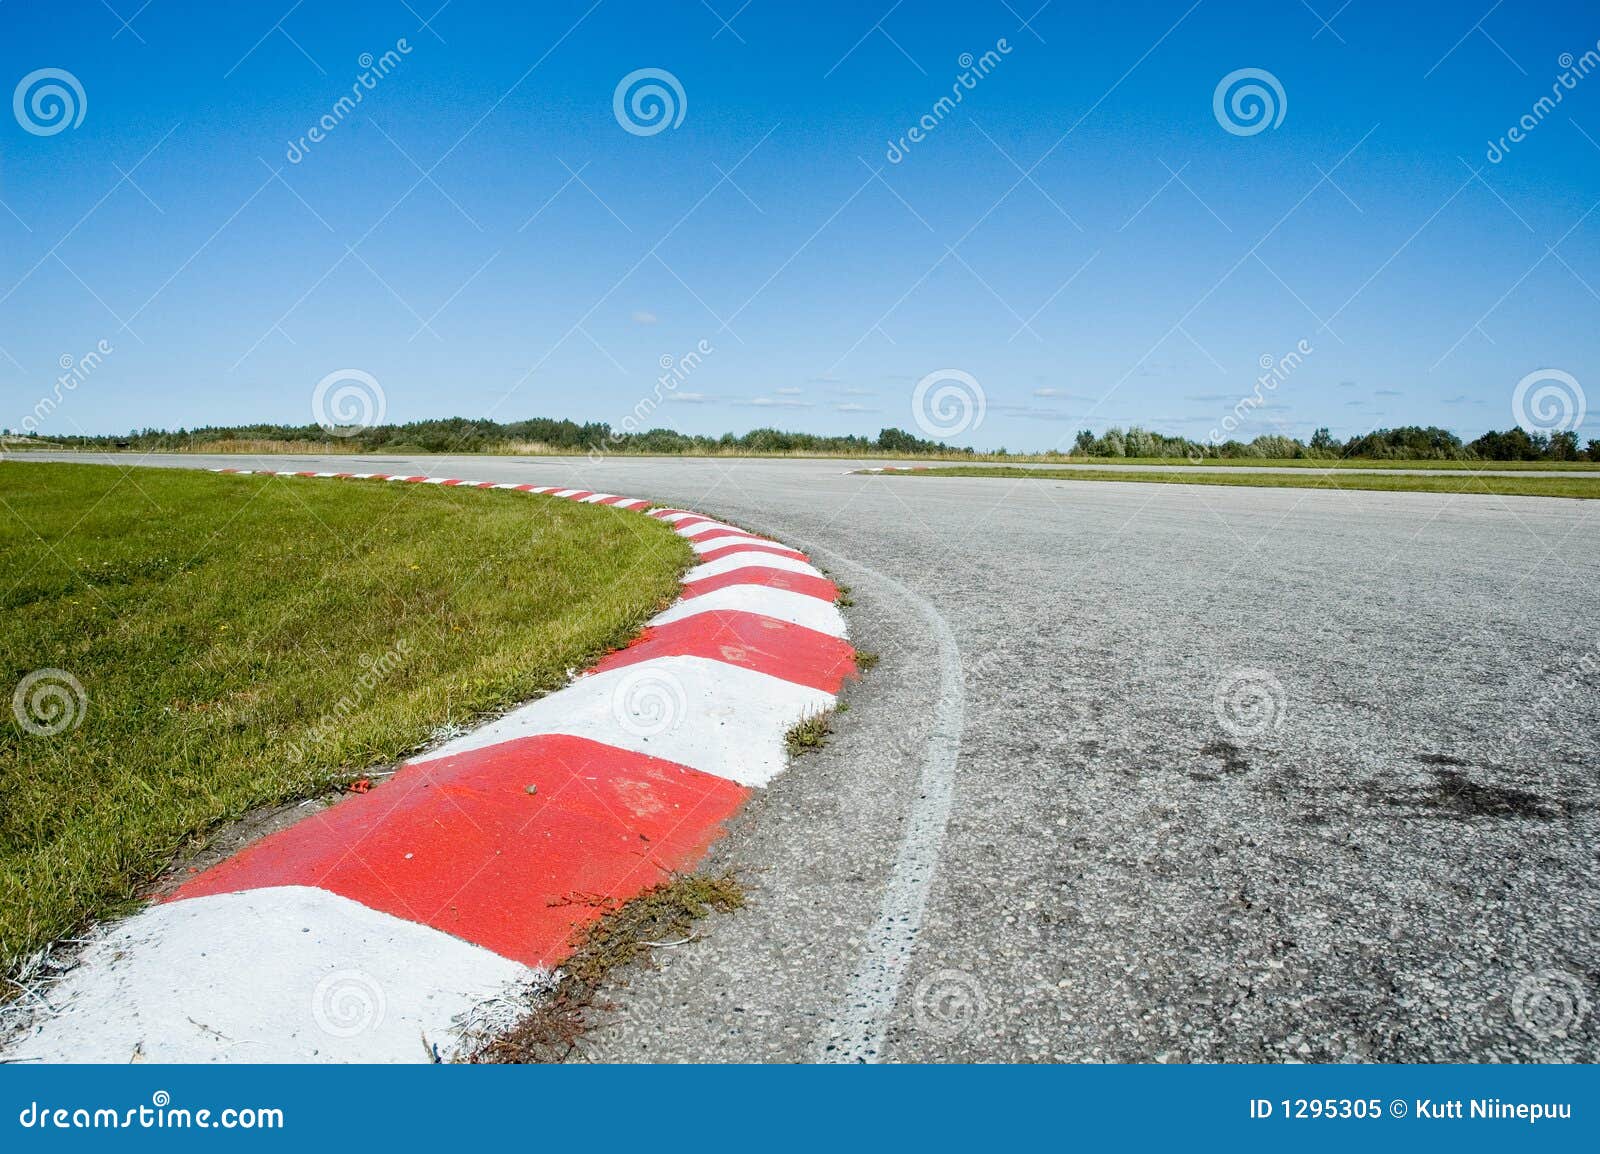 empty race track